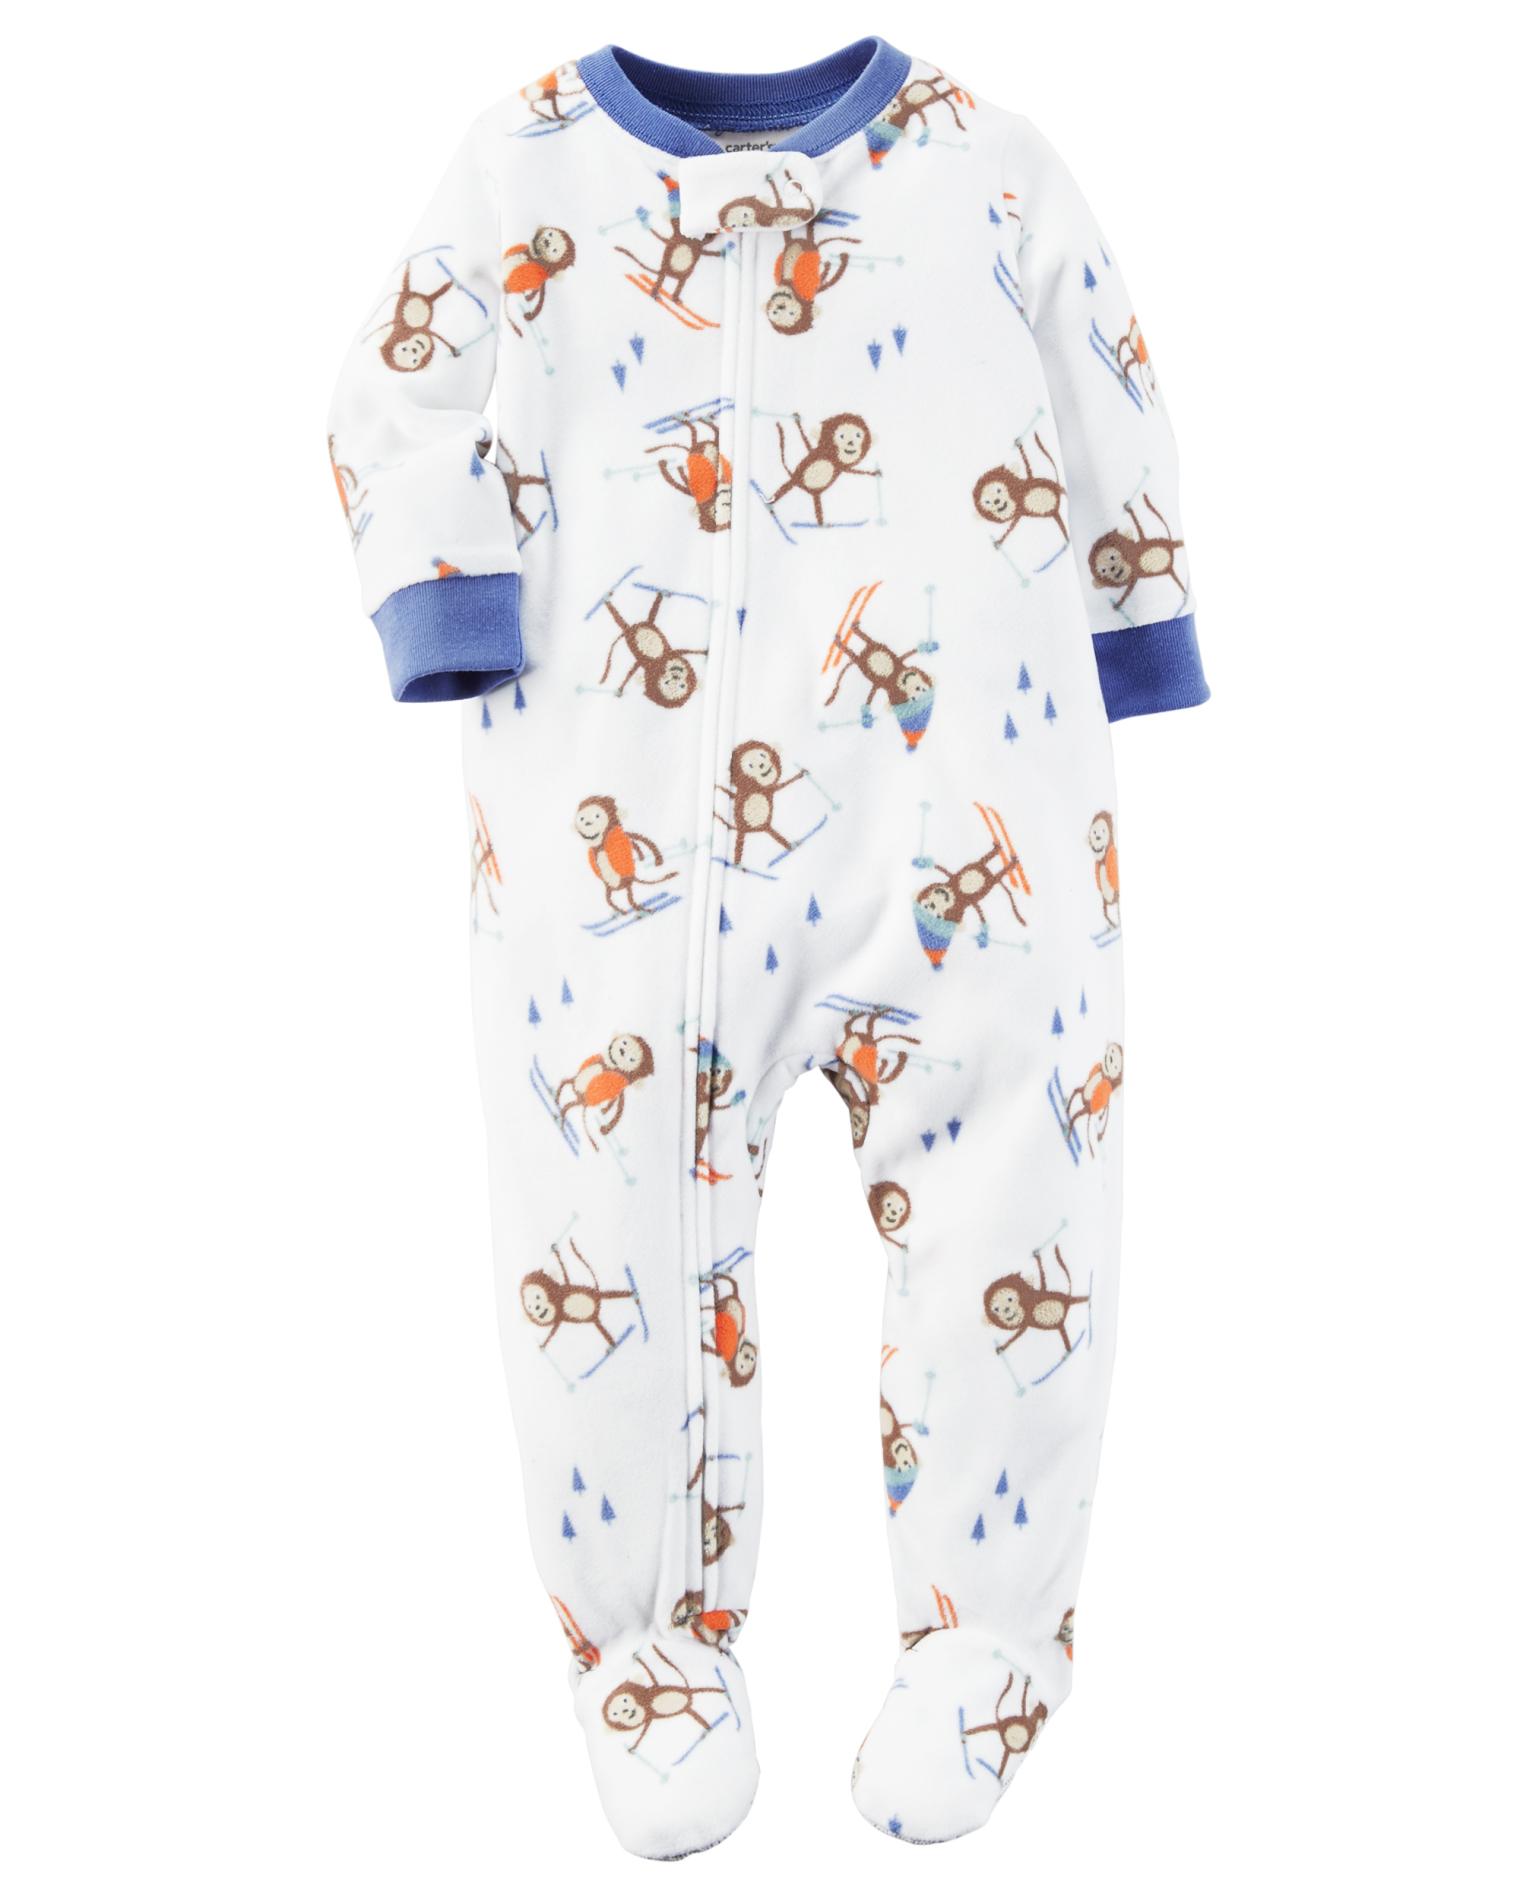 Carter's Infant & Toddler Boys' Fleece Sleeper Pajamas Monkey